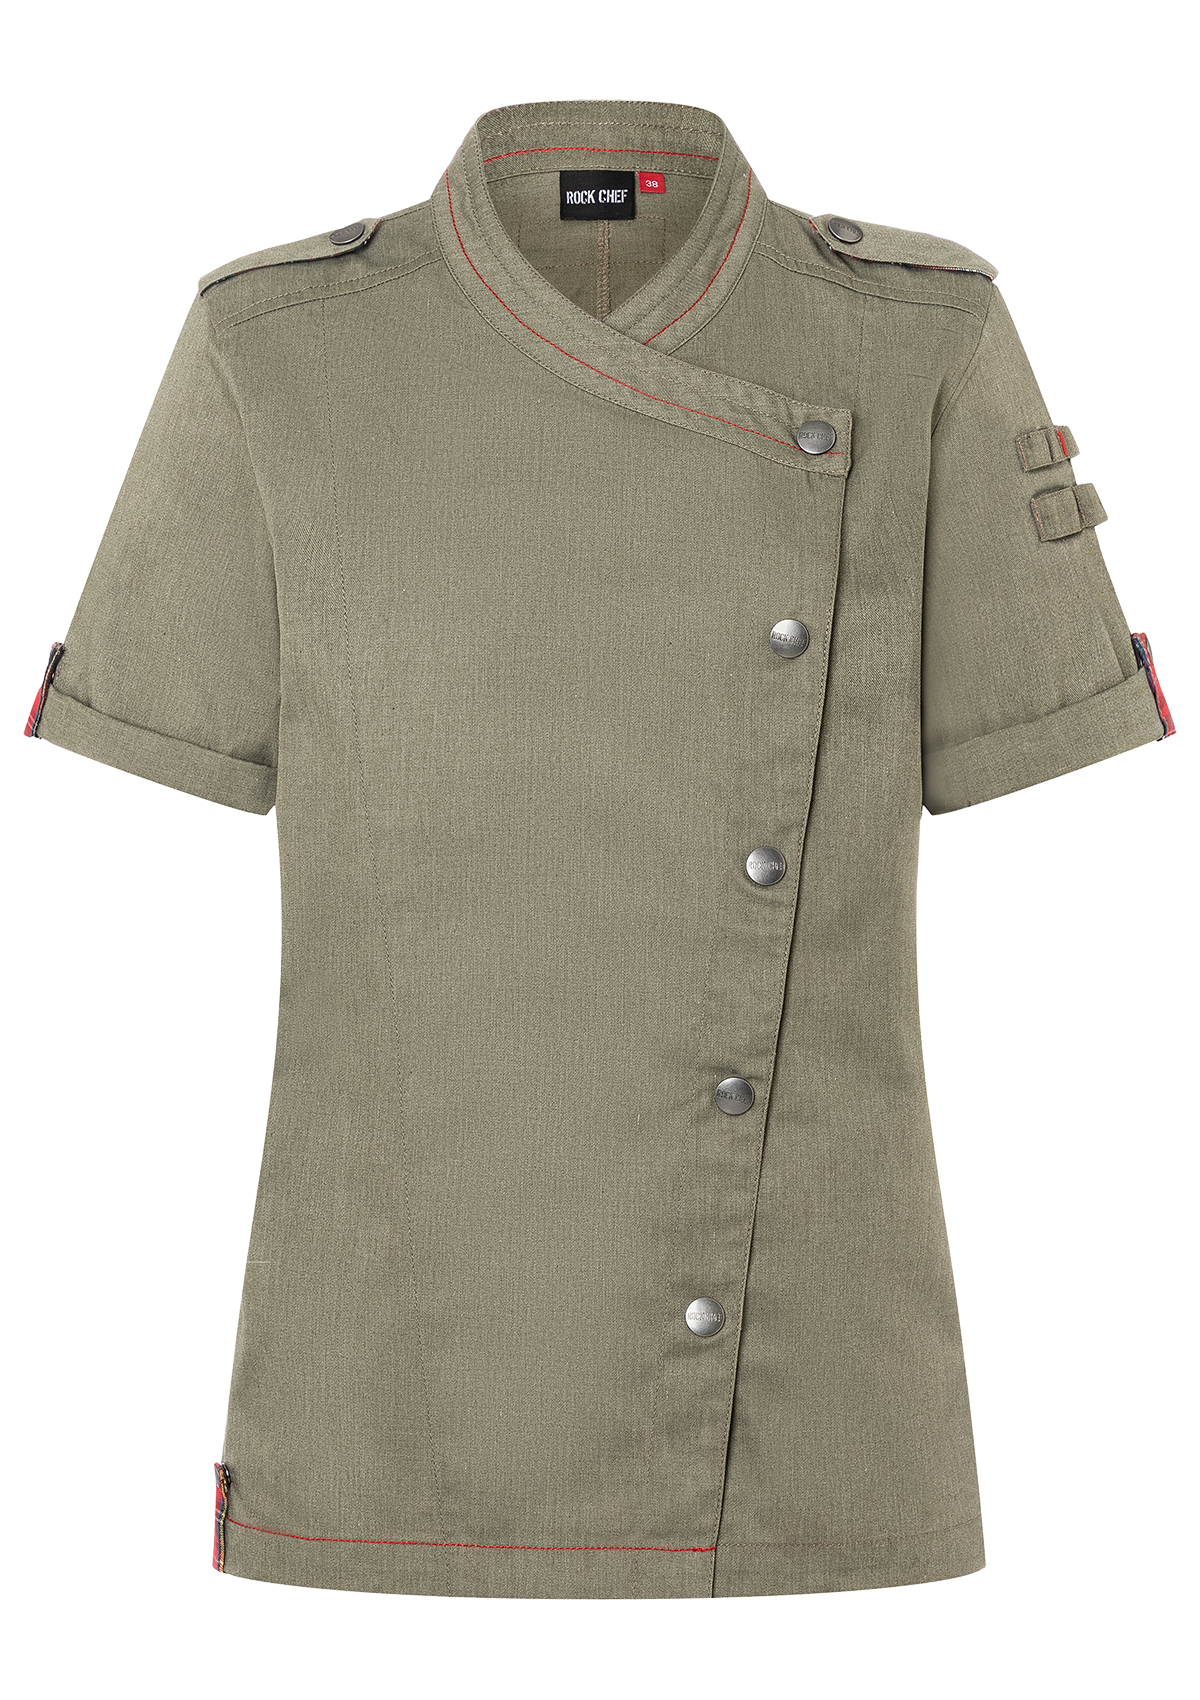 Women's Chef Jacket Denim Short Sleeves - ROCK CHEF®